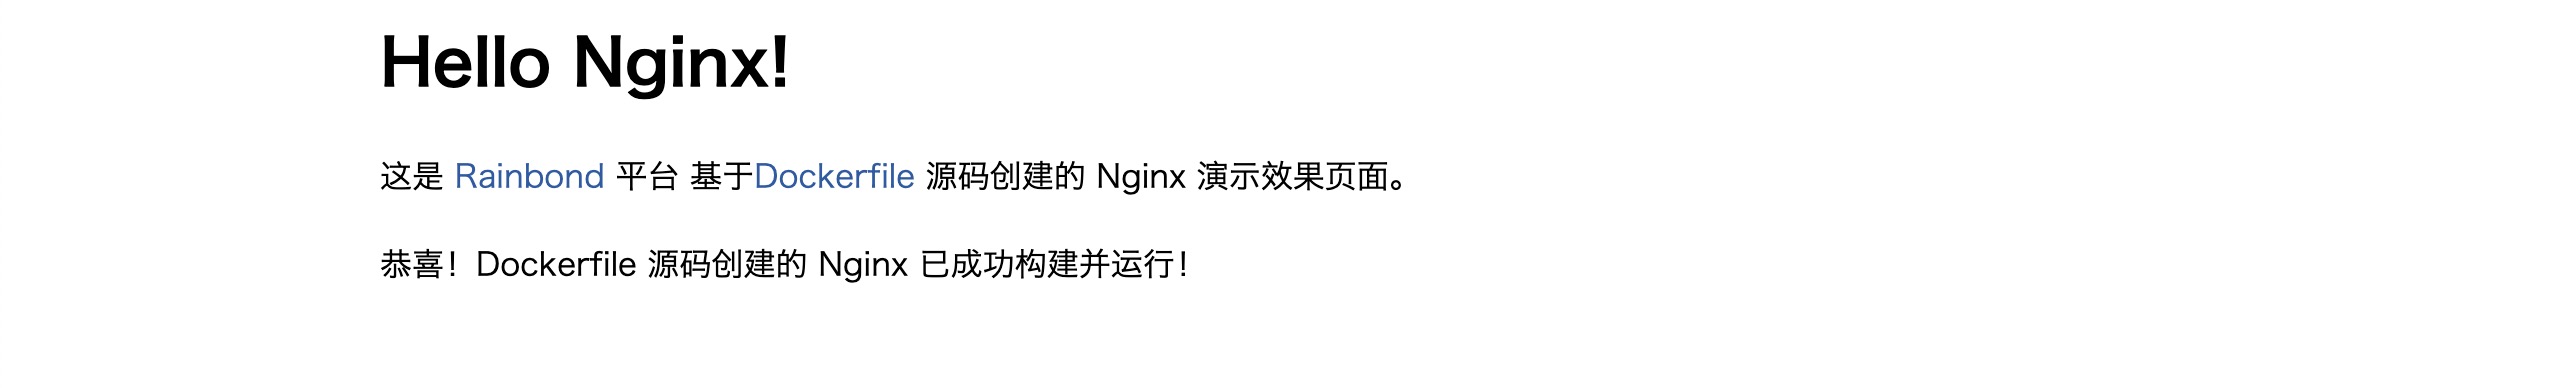 nginx-page